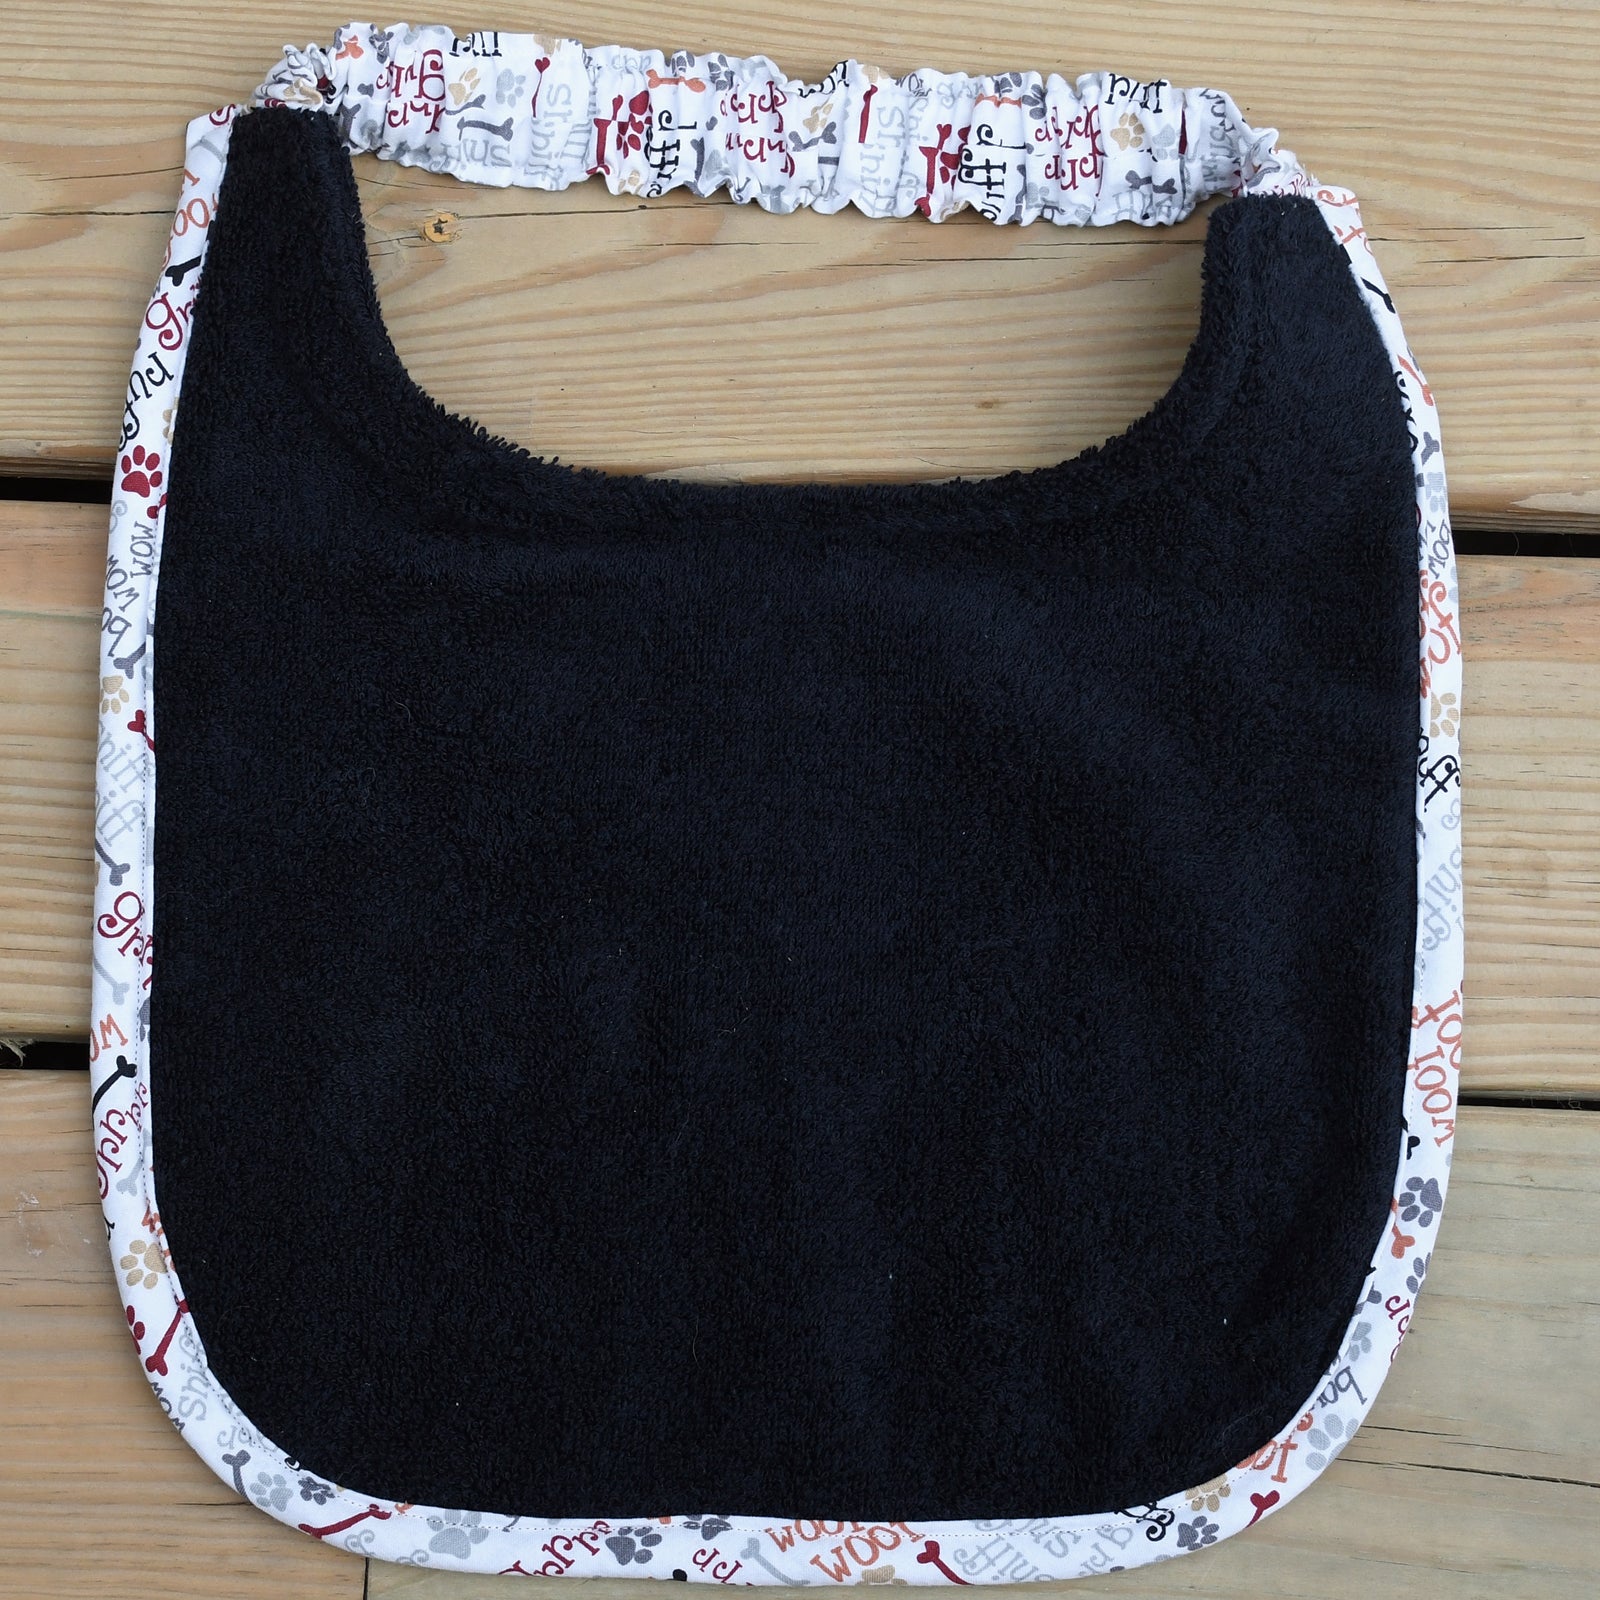 Plain Drool Bib - no embroidery (black front black back)